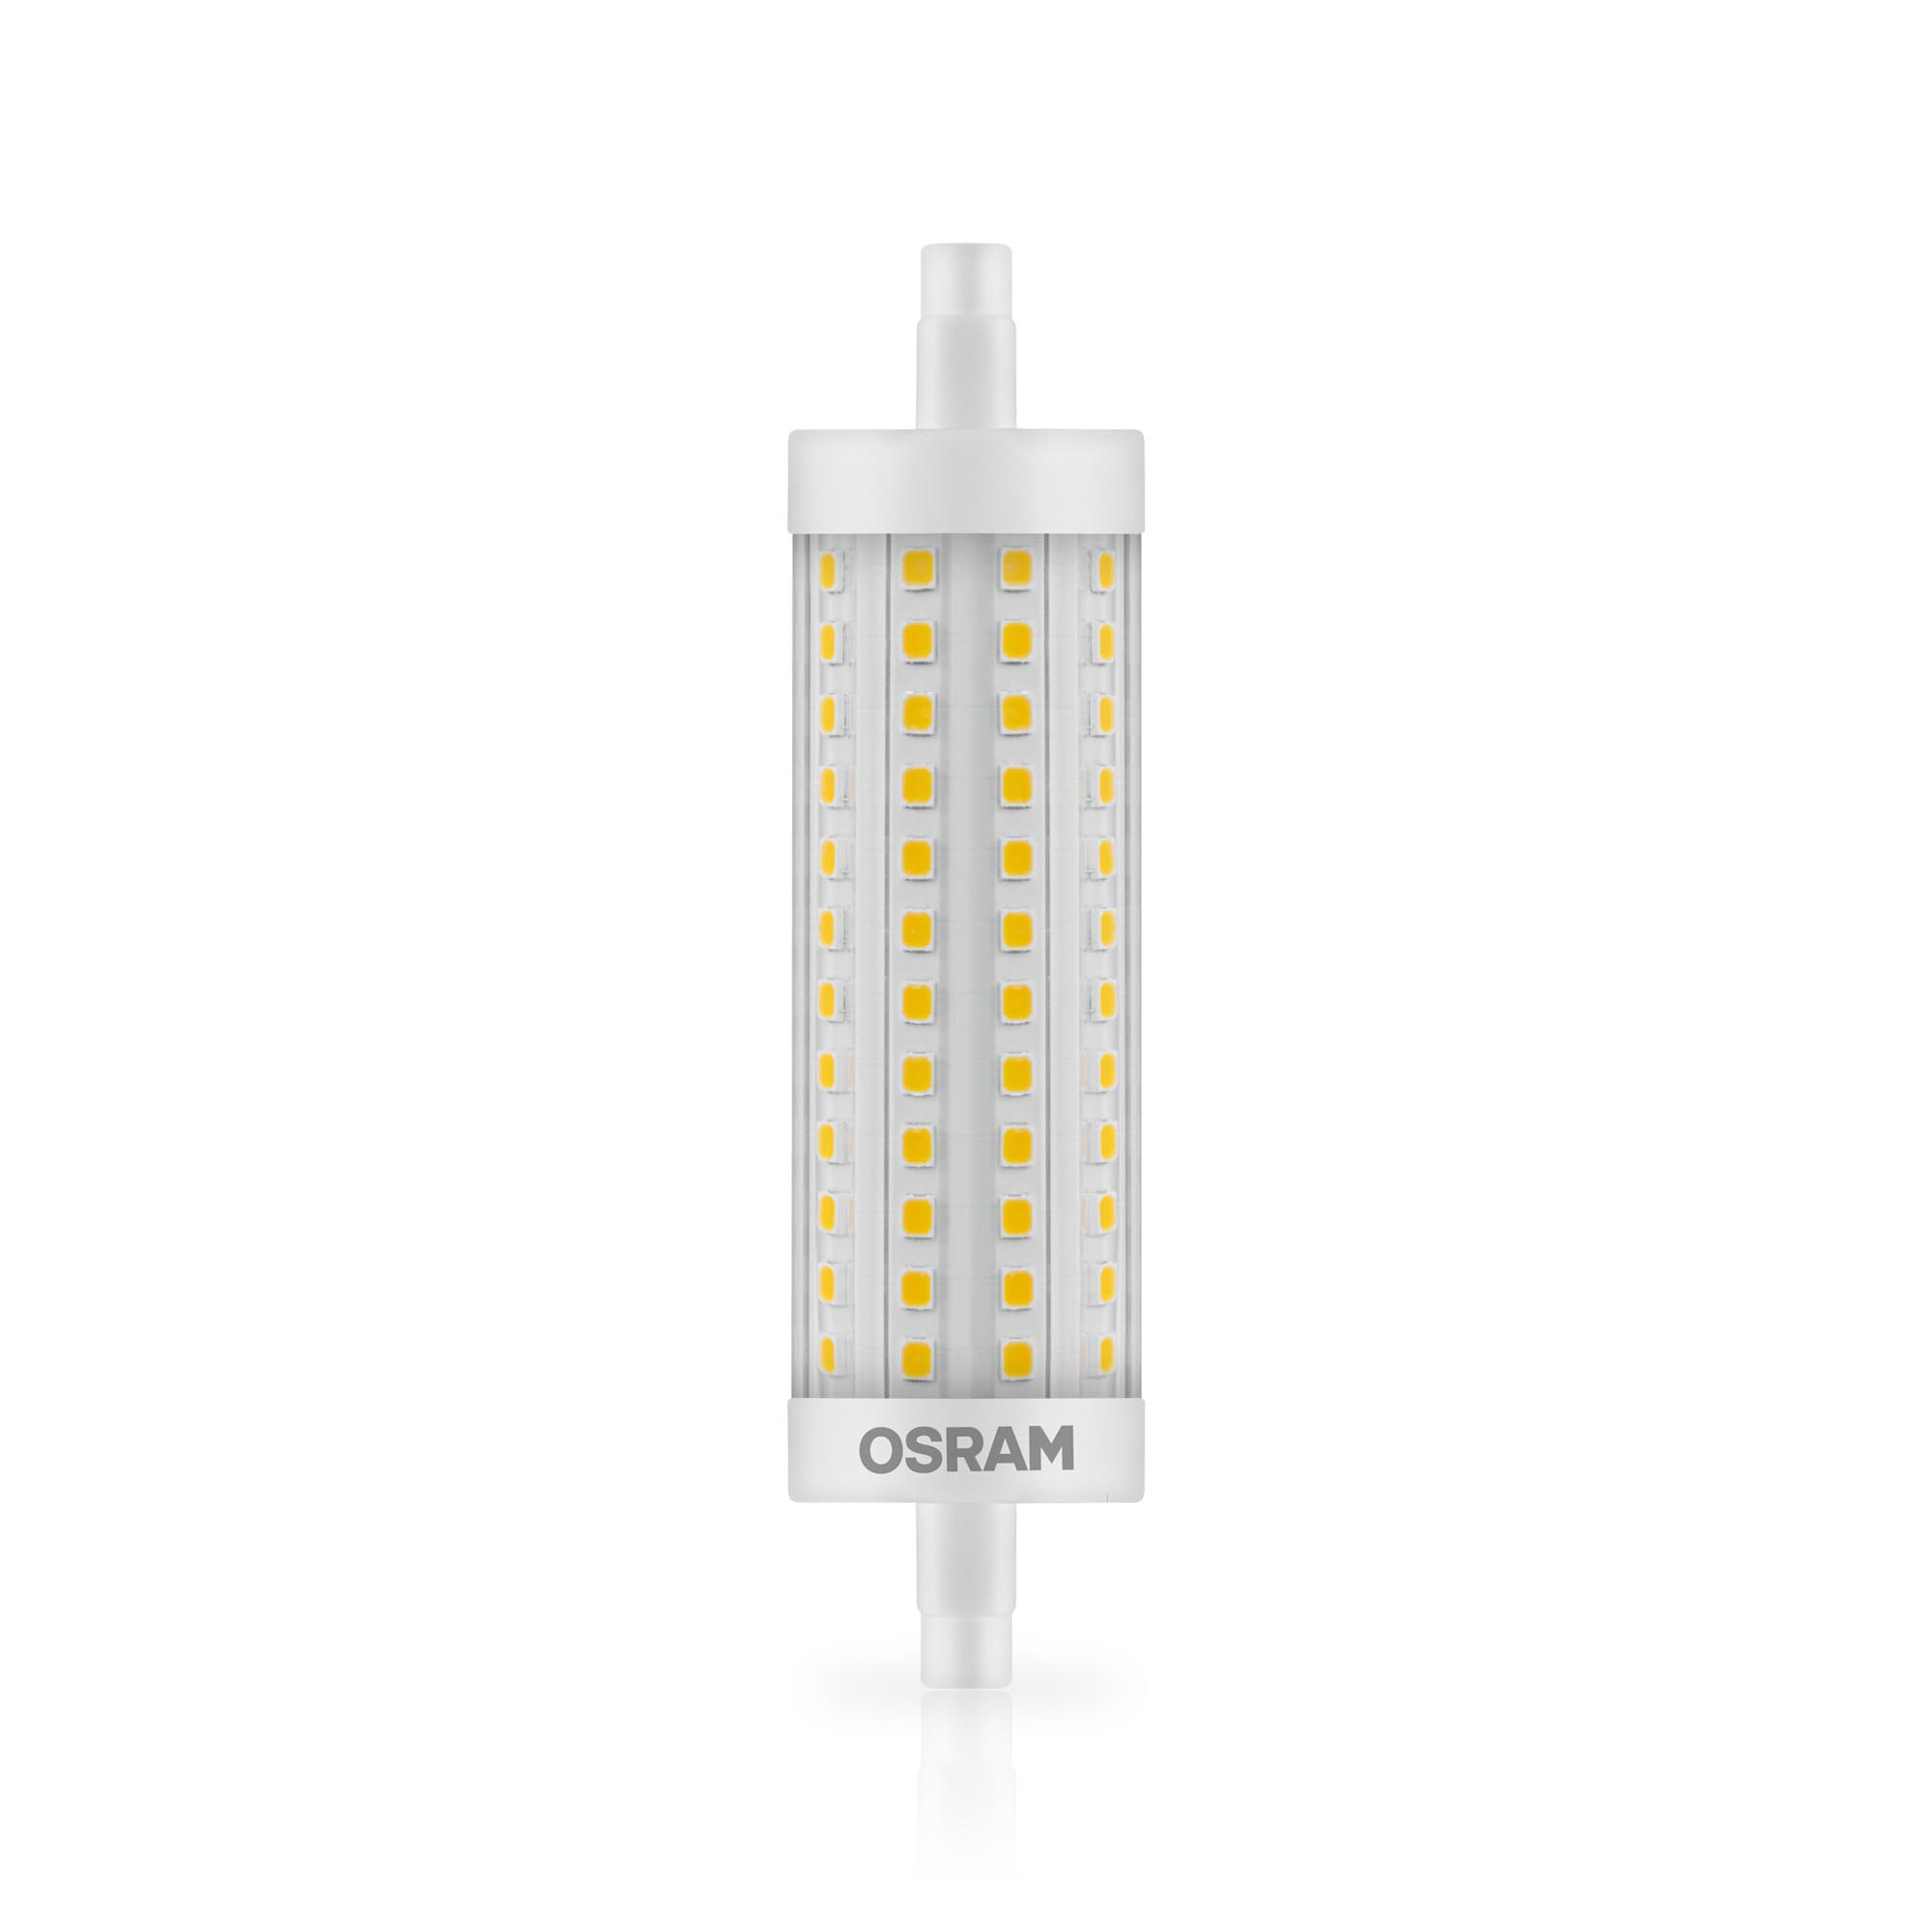 Osram LED SST DIM  LINE 118  HS 125 15W 827 R7S 118mm 2000lm 2700K